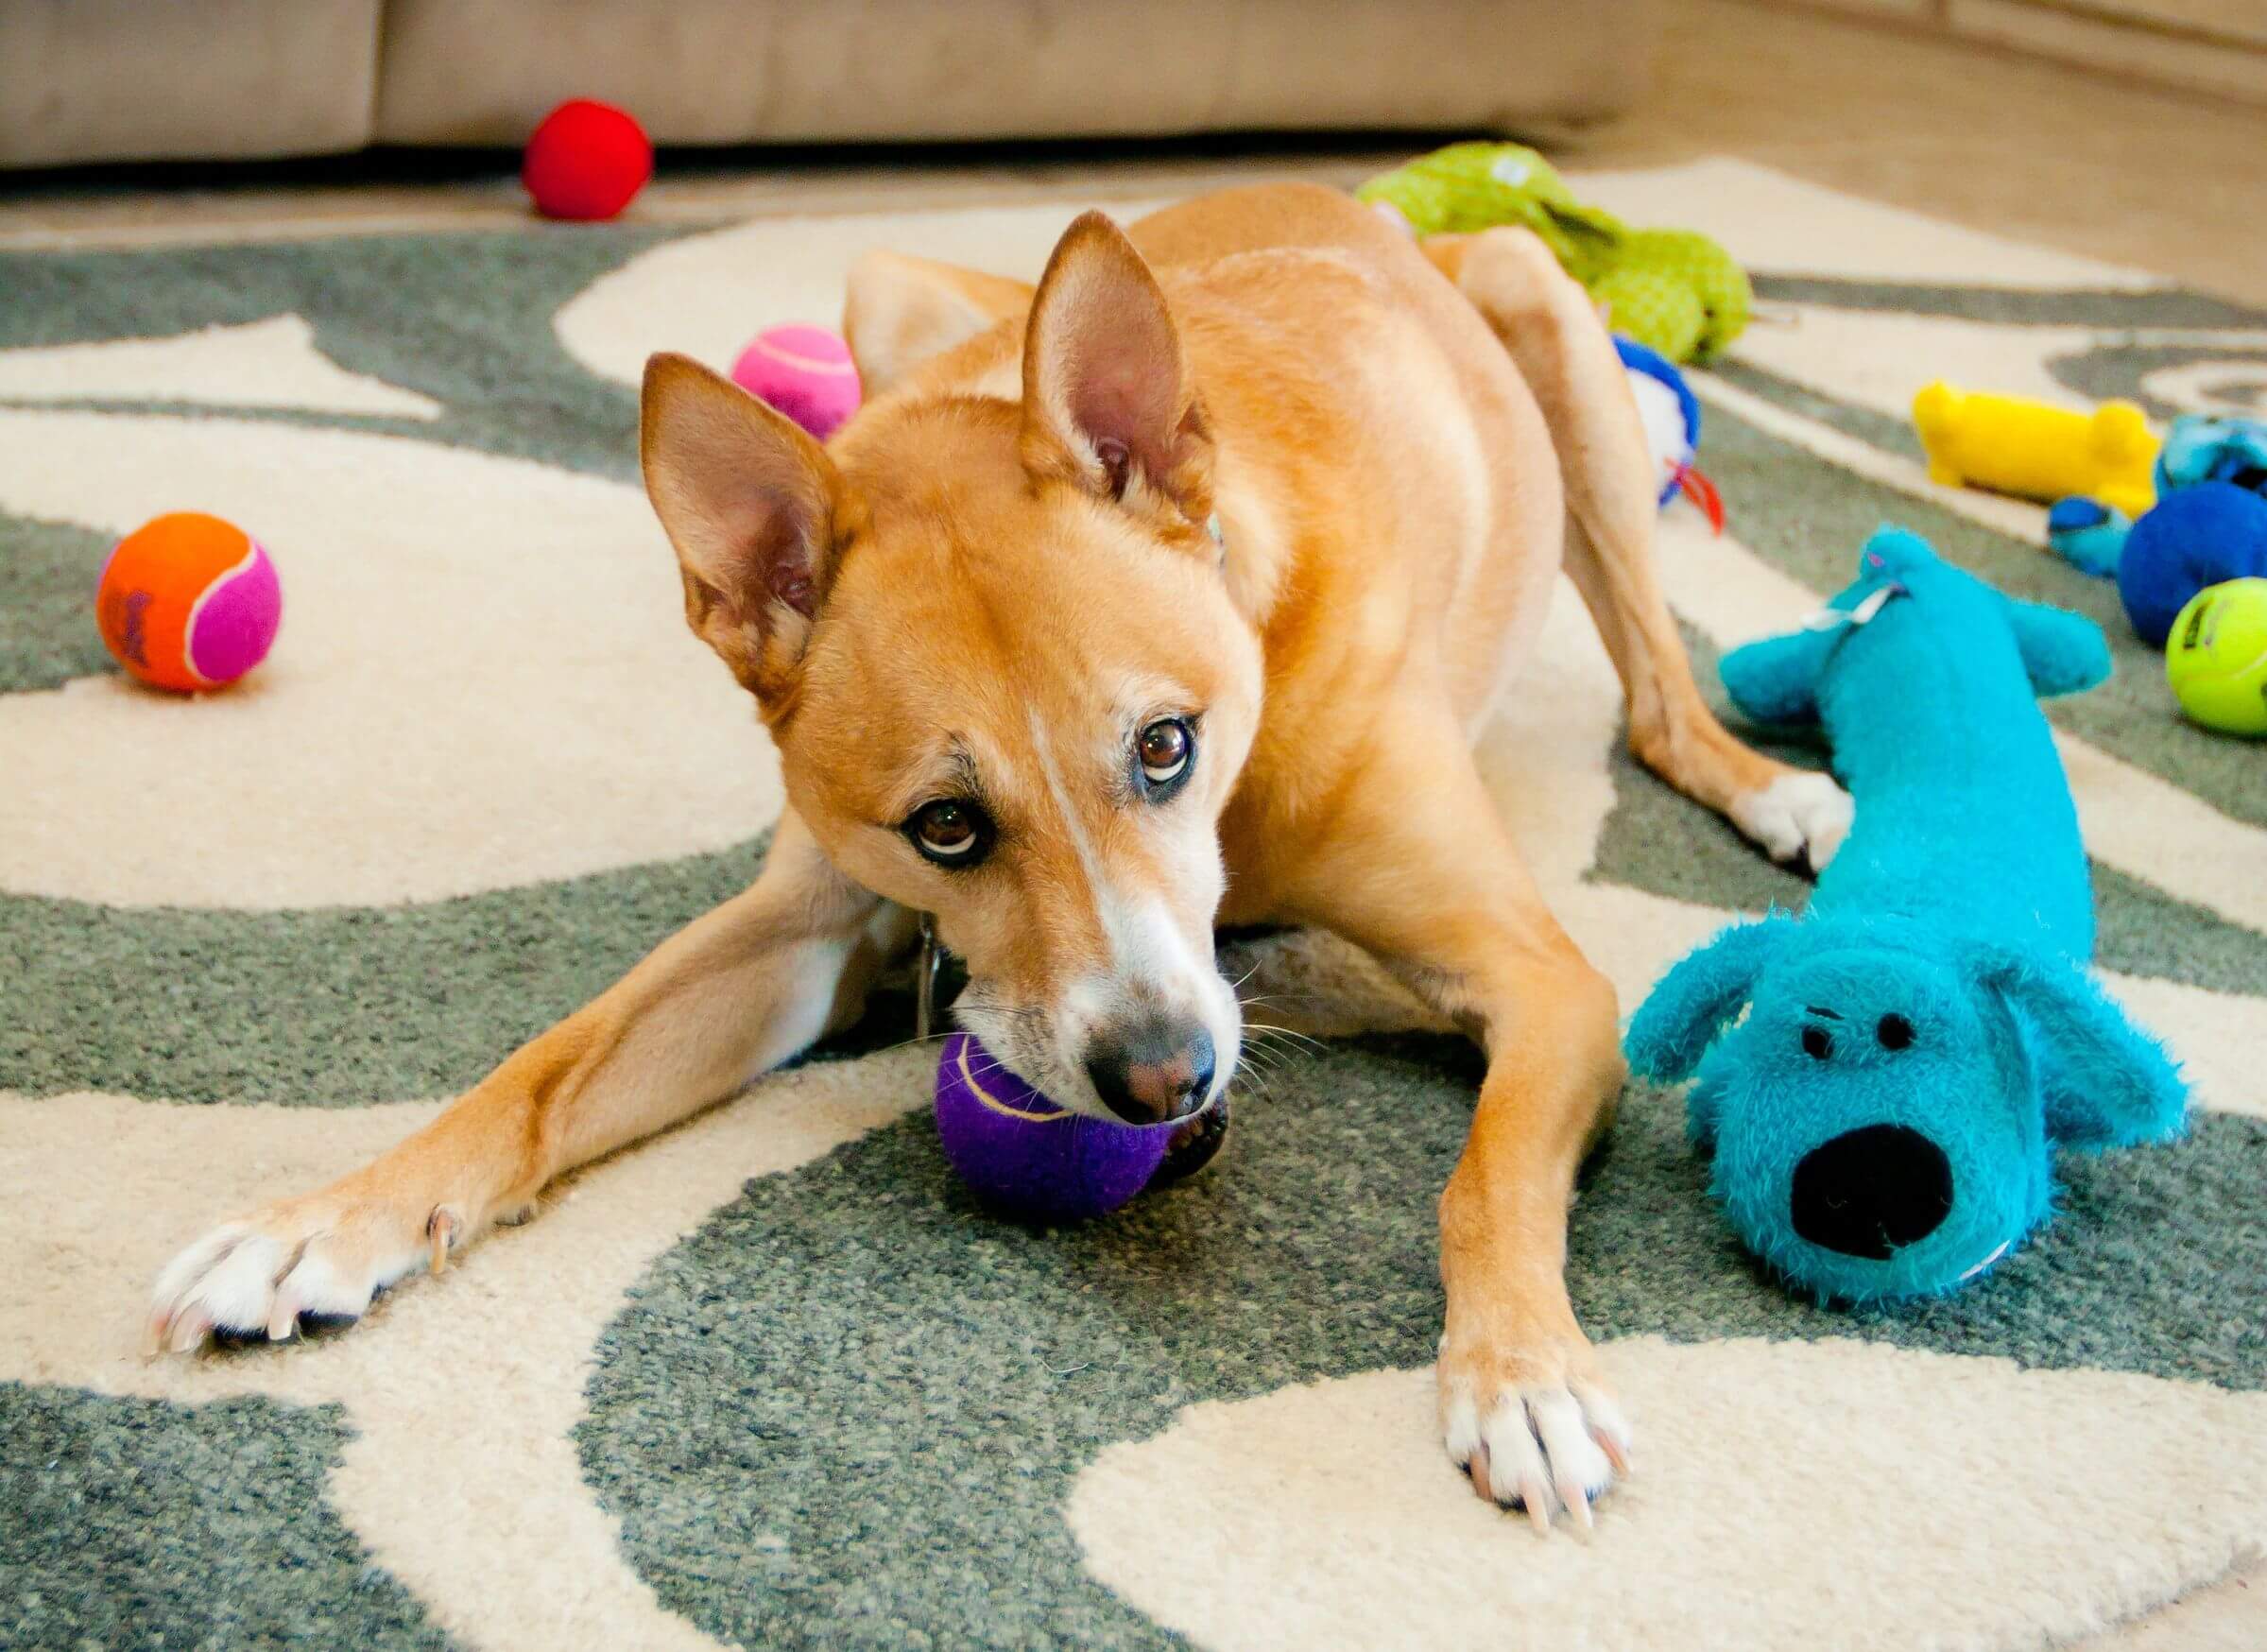 Your pet big. Игрушка для собак. Собаки и их игрушки. Dog Toys игрушки для собак. Собака охраняет игрушку.